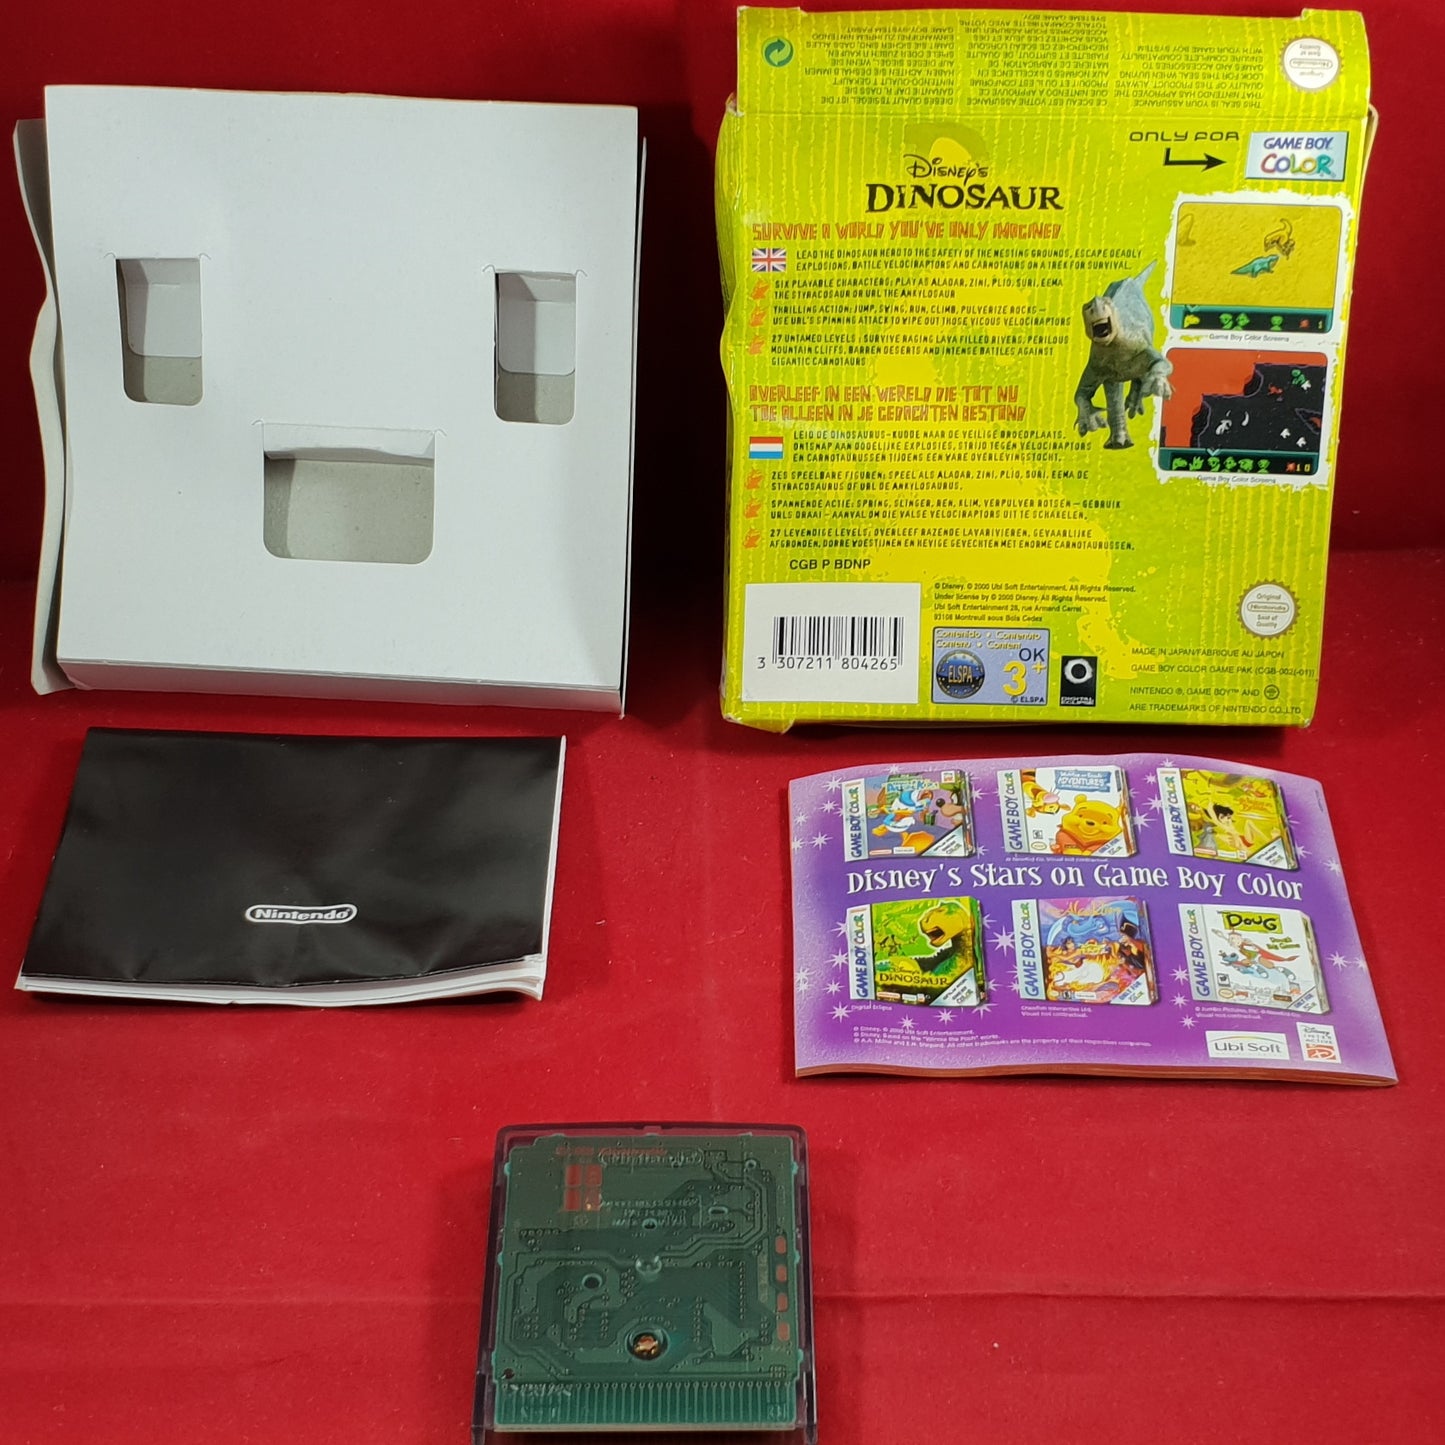 Disney's Dinosaur Game Boy Color Game